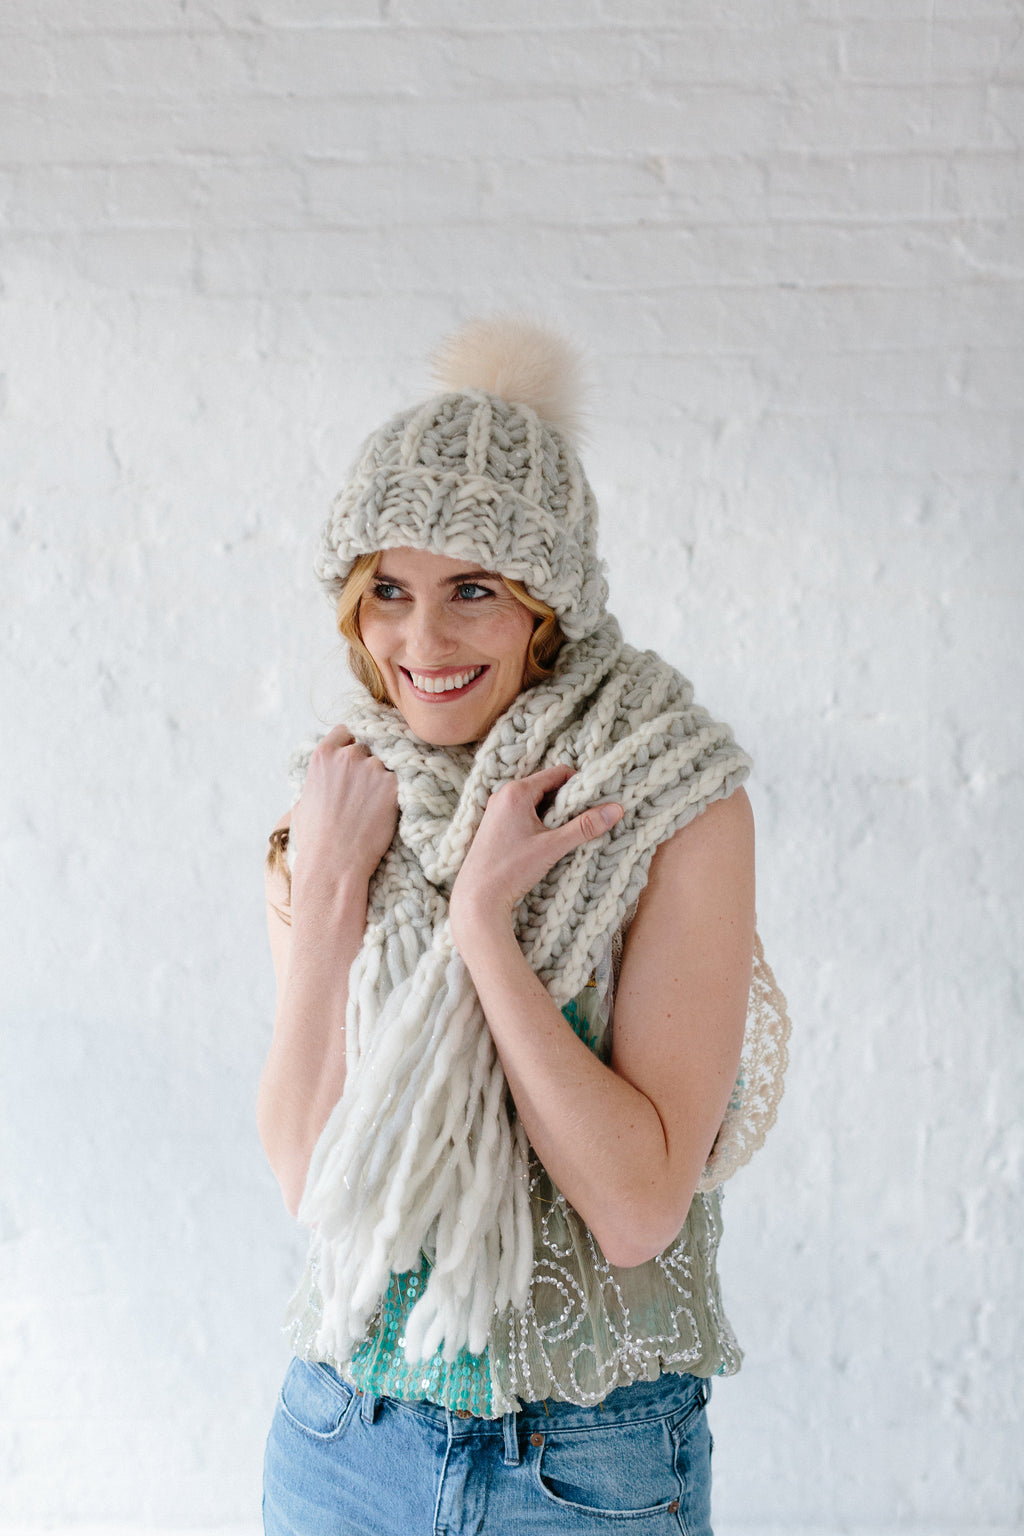 Joie Brioche Hat Knit Collage - chunky yarn knitting pattern